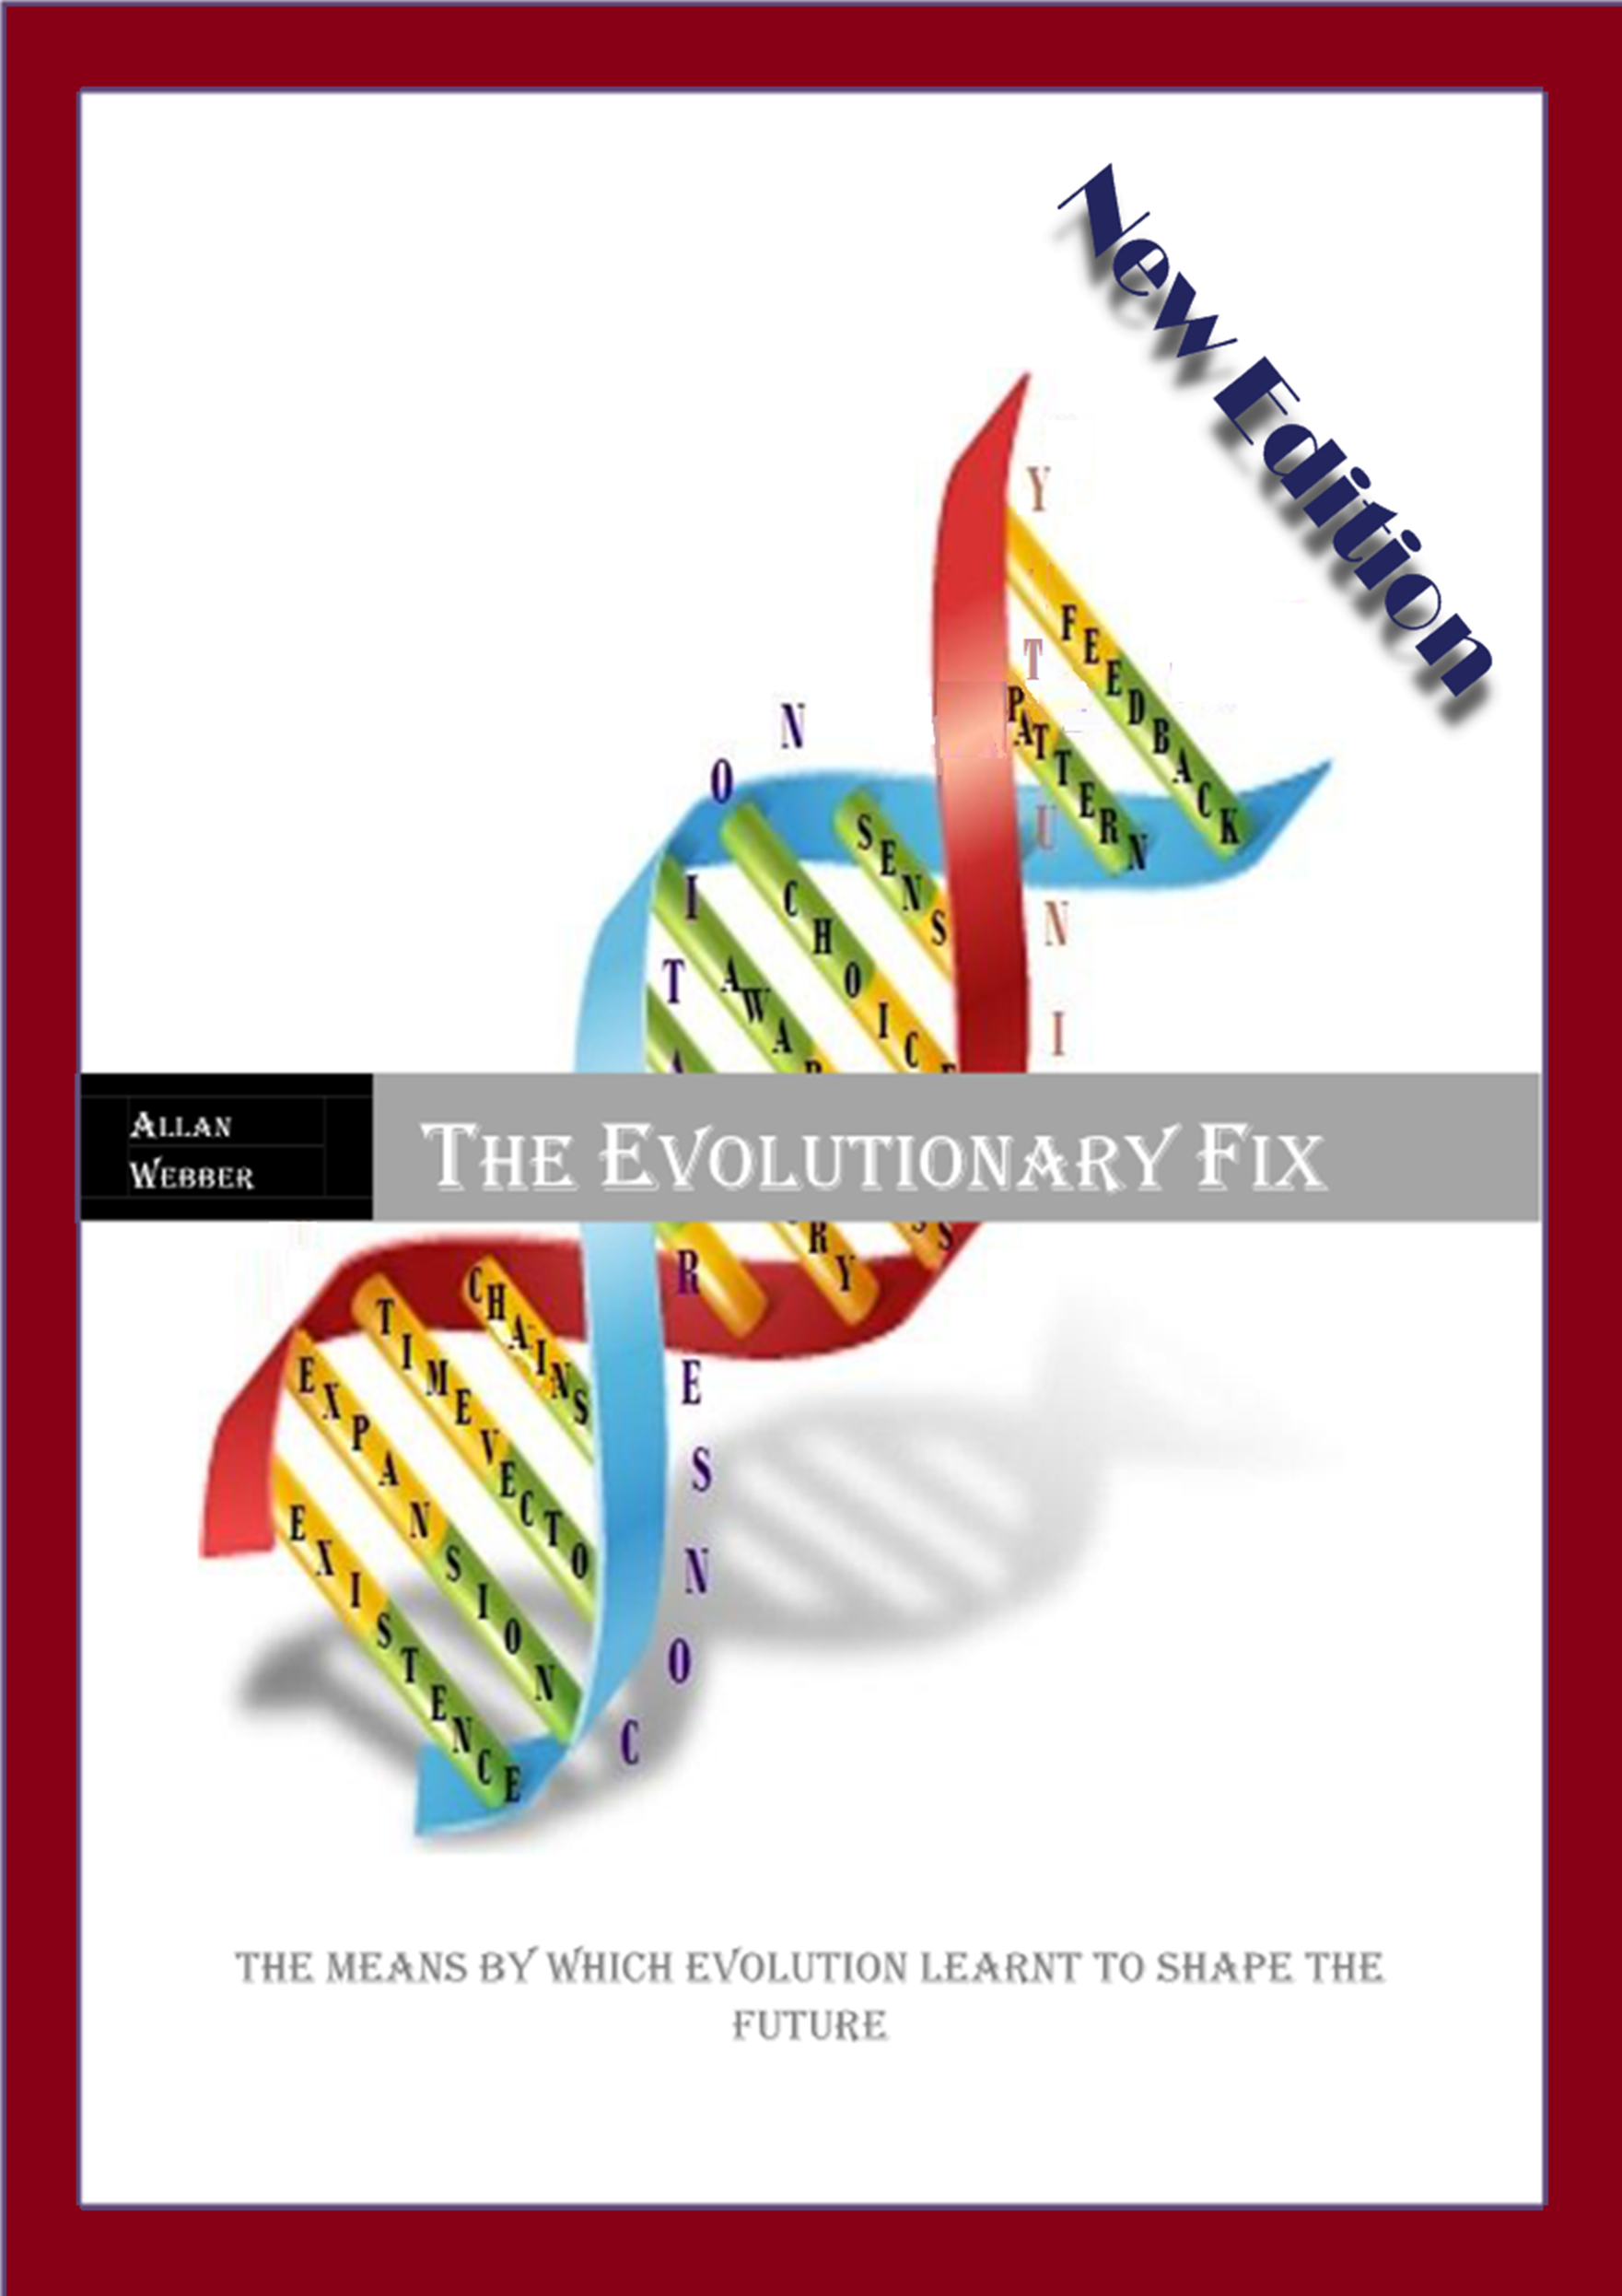 A webbers book - The Evolutionary Fix